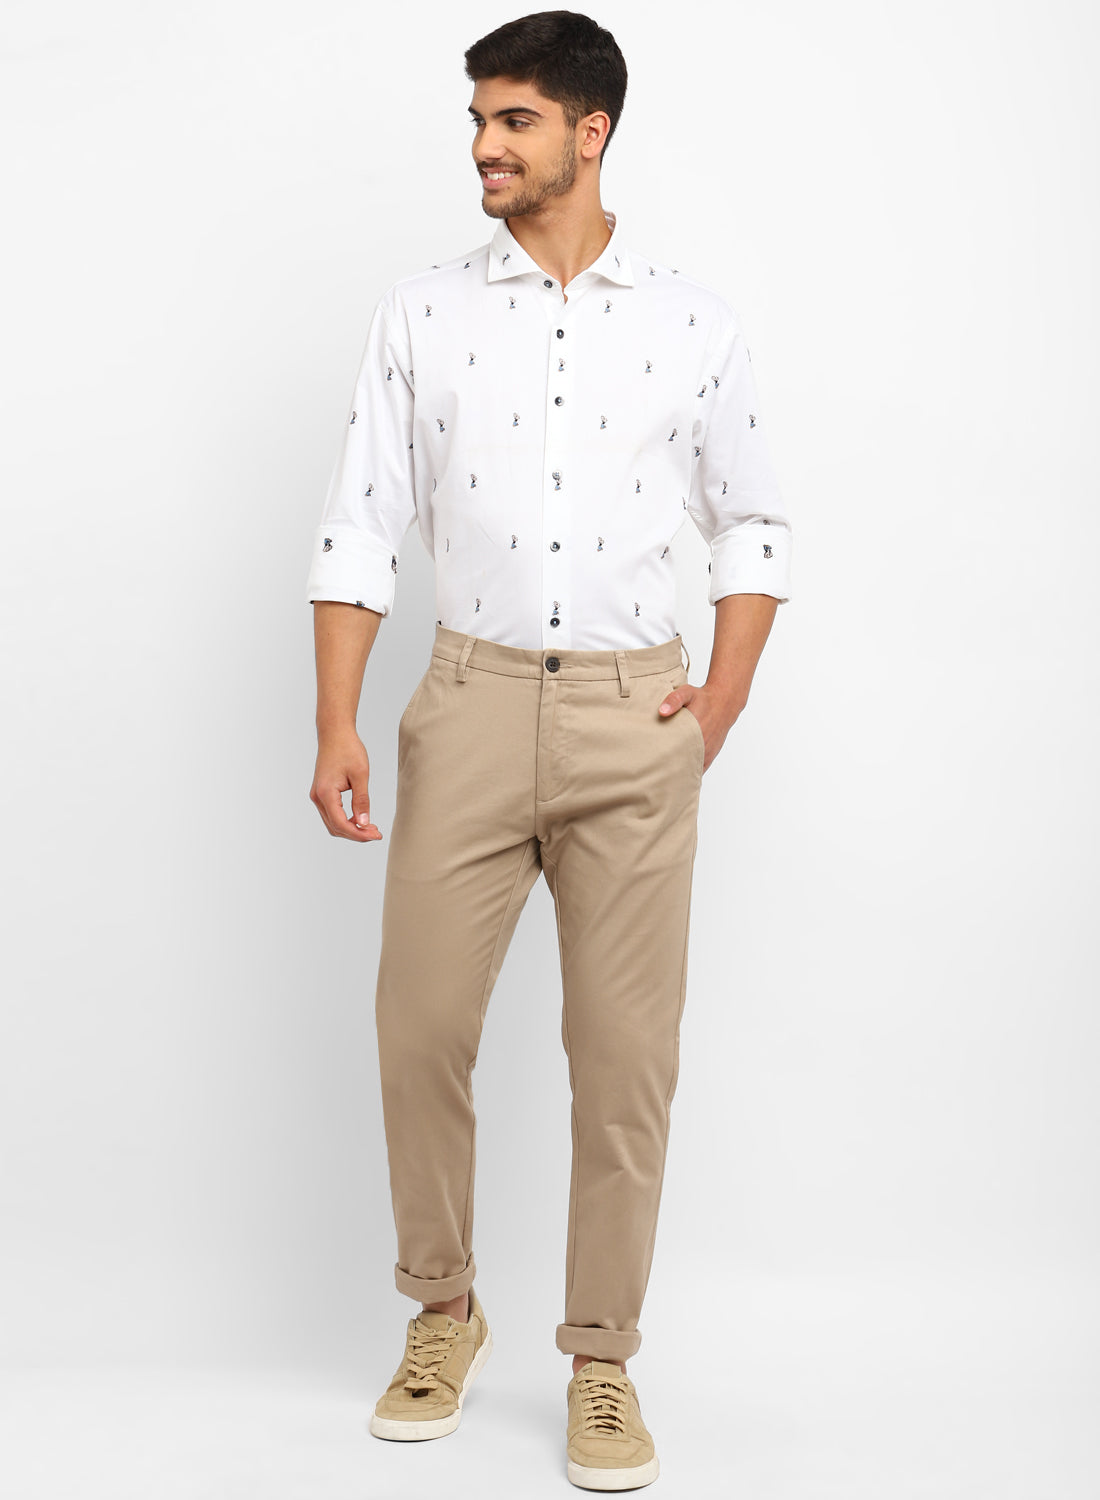 Khaki Cotton Casual Trouser